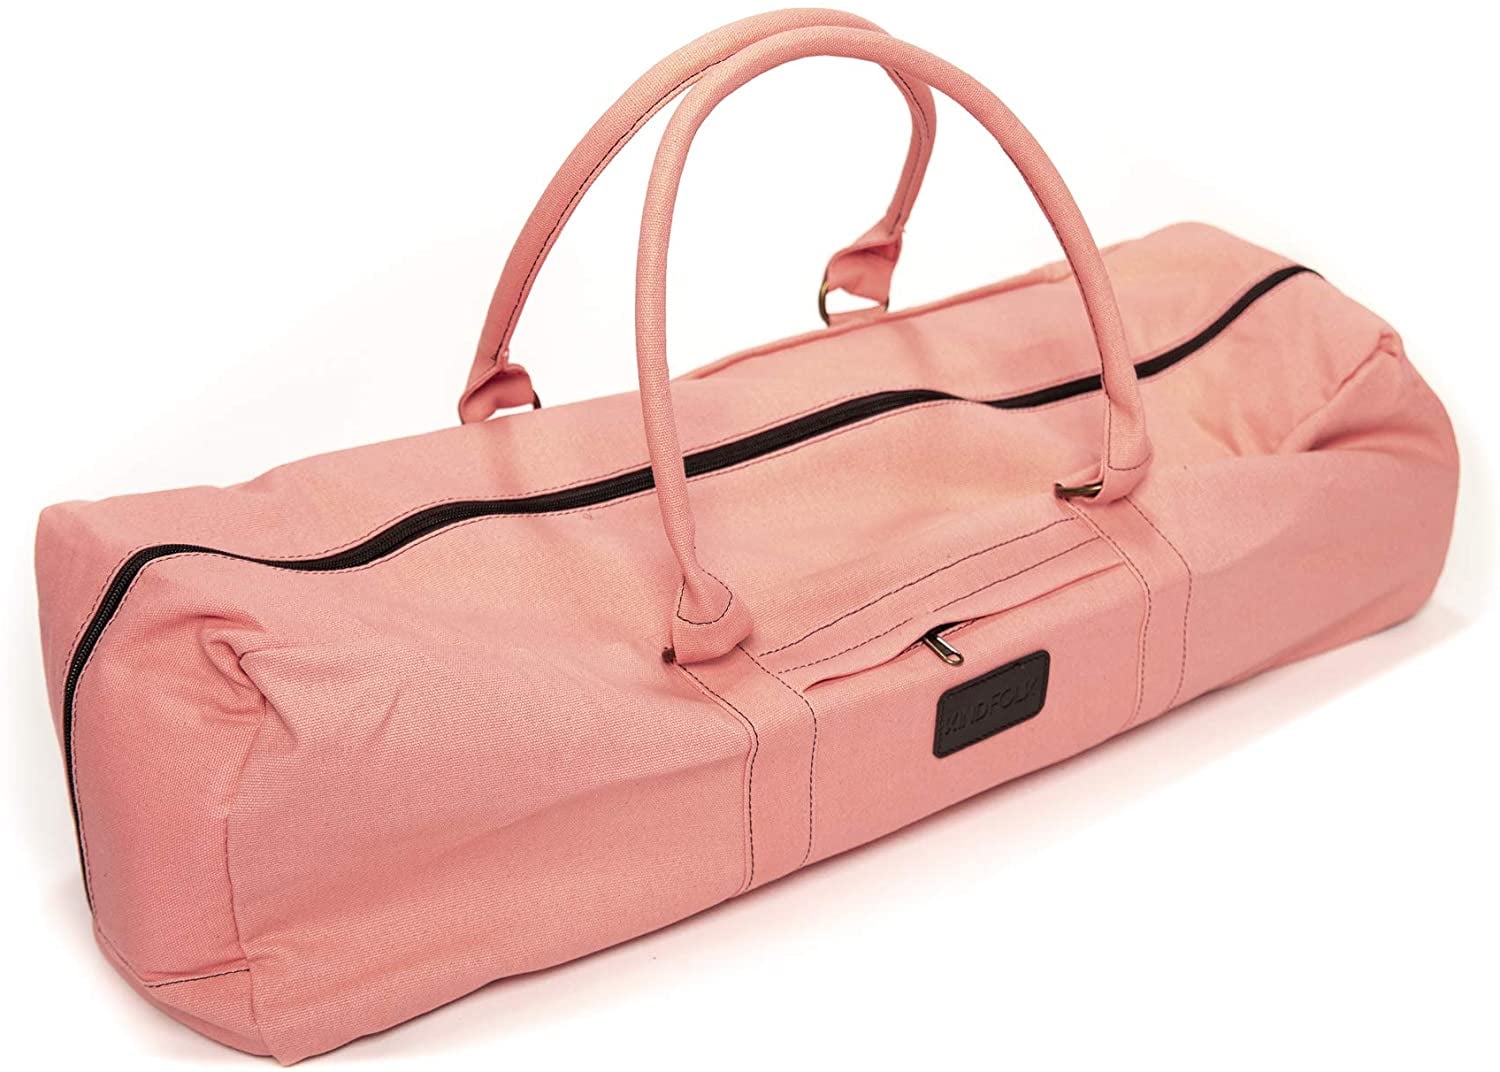 Personalized Yoga Mat Bag Stylish and Functional Waterproof Yoga